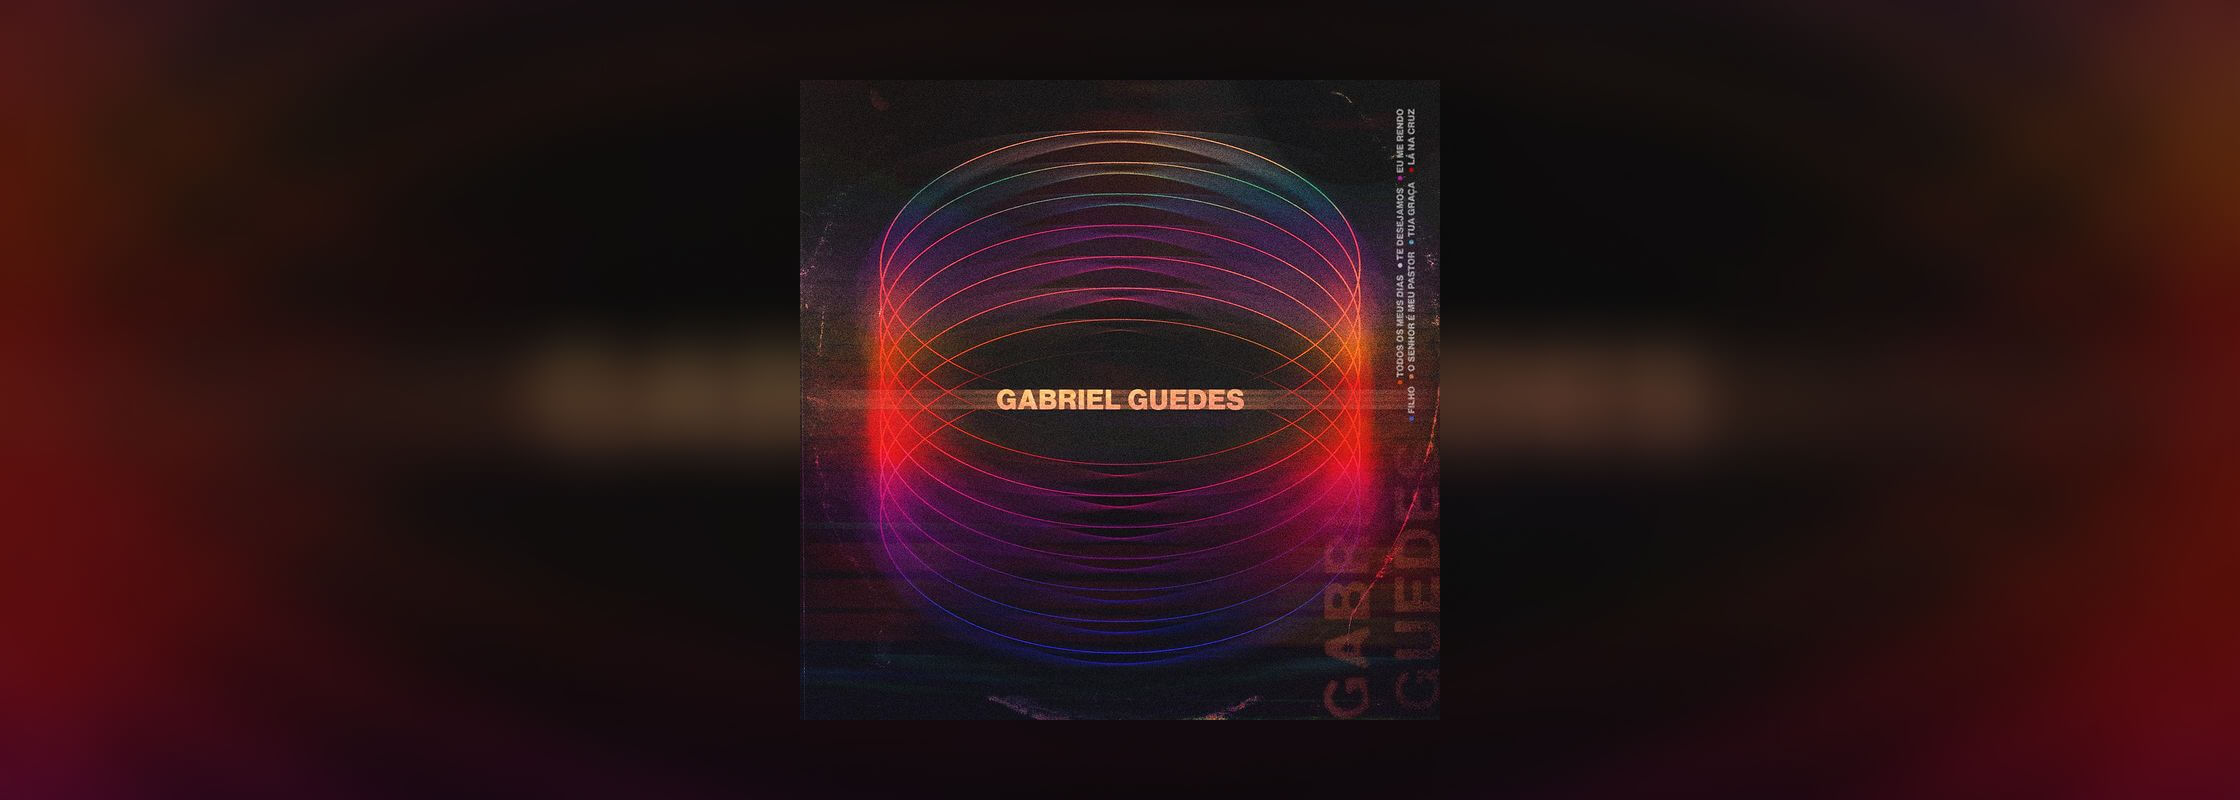 Novo álbum de Gabriel Guedes